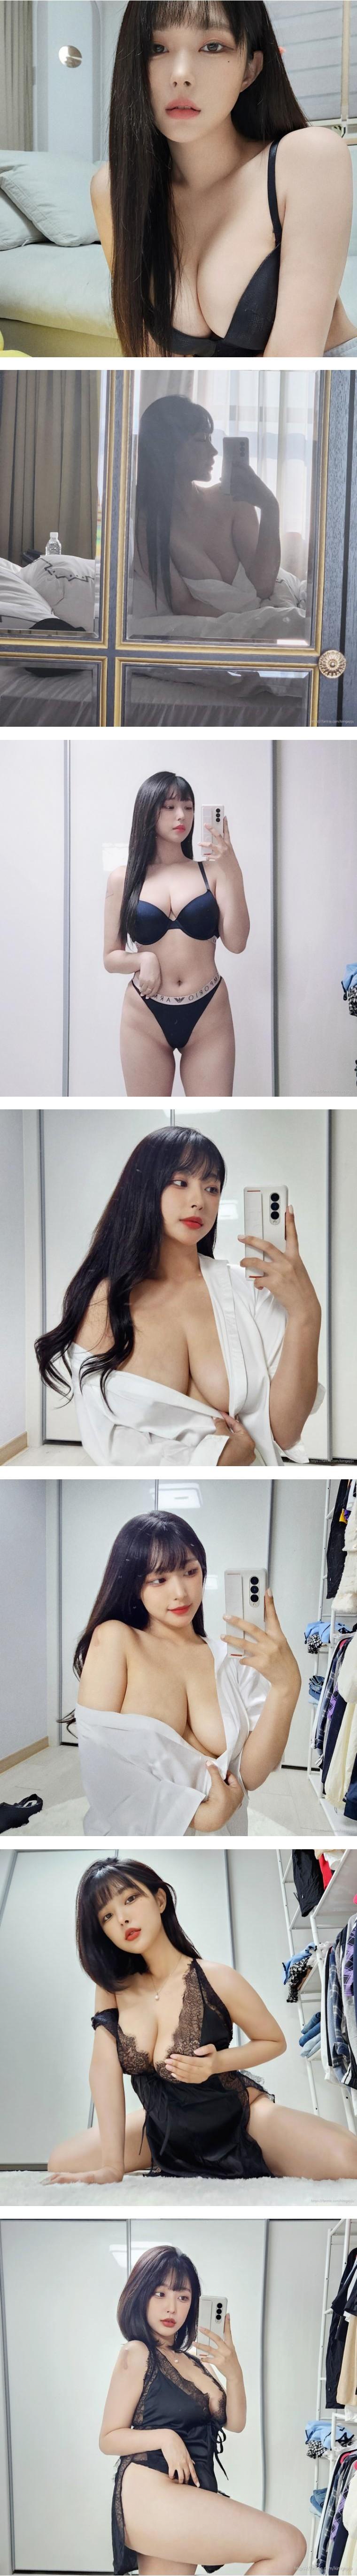 Kim Gap-joo wearing a black panty bra